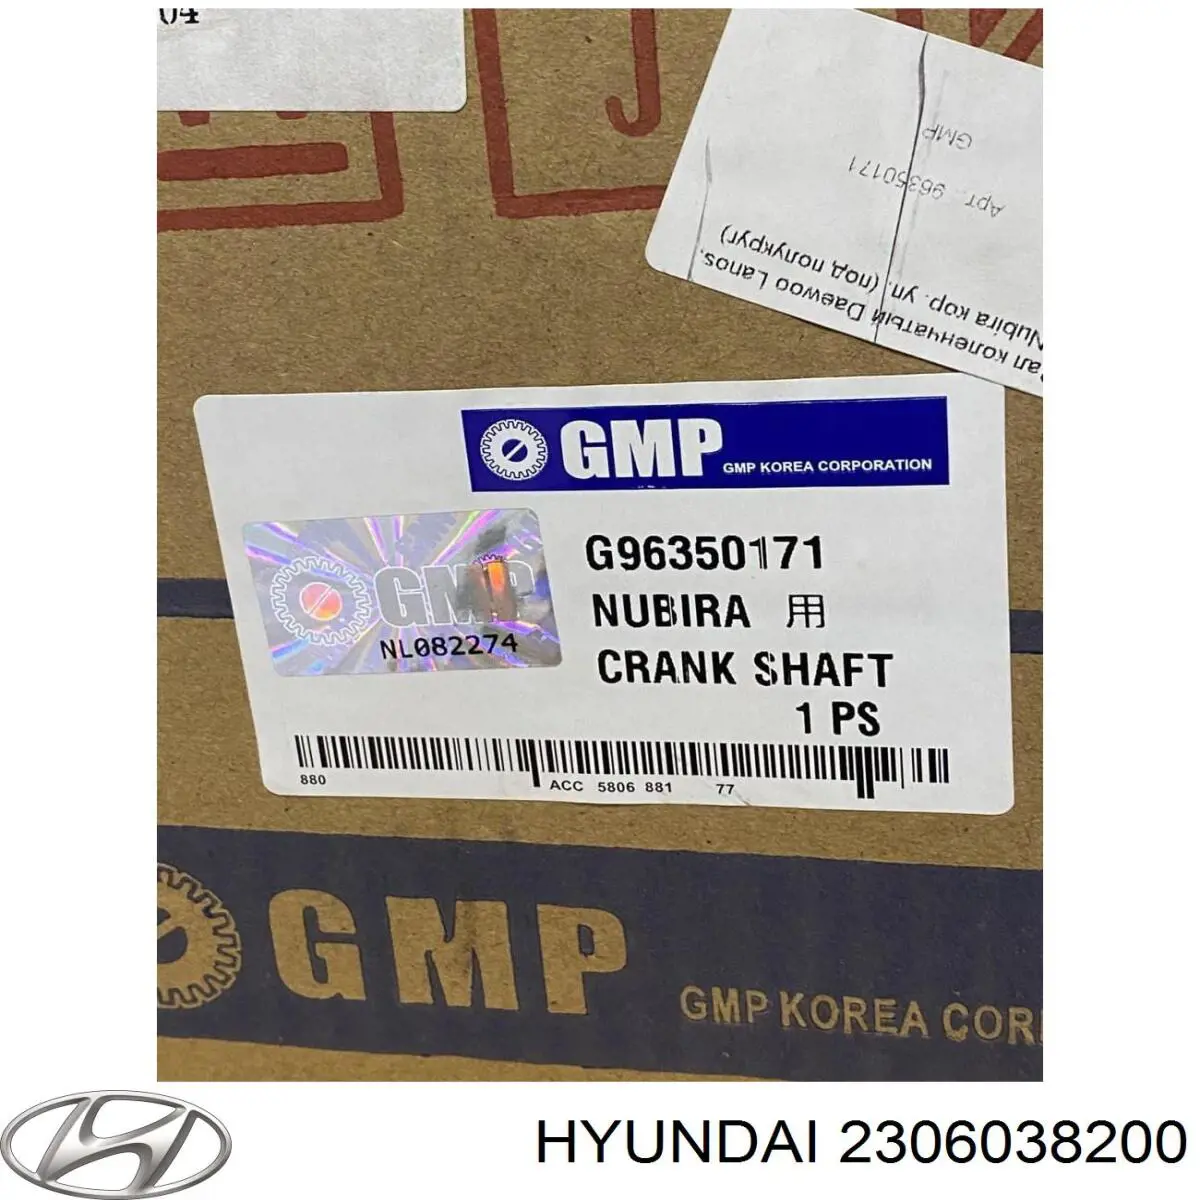 2306038200 Hyundai/Kia вкладыши коленвала шатунные, комплект, стандарт (std)